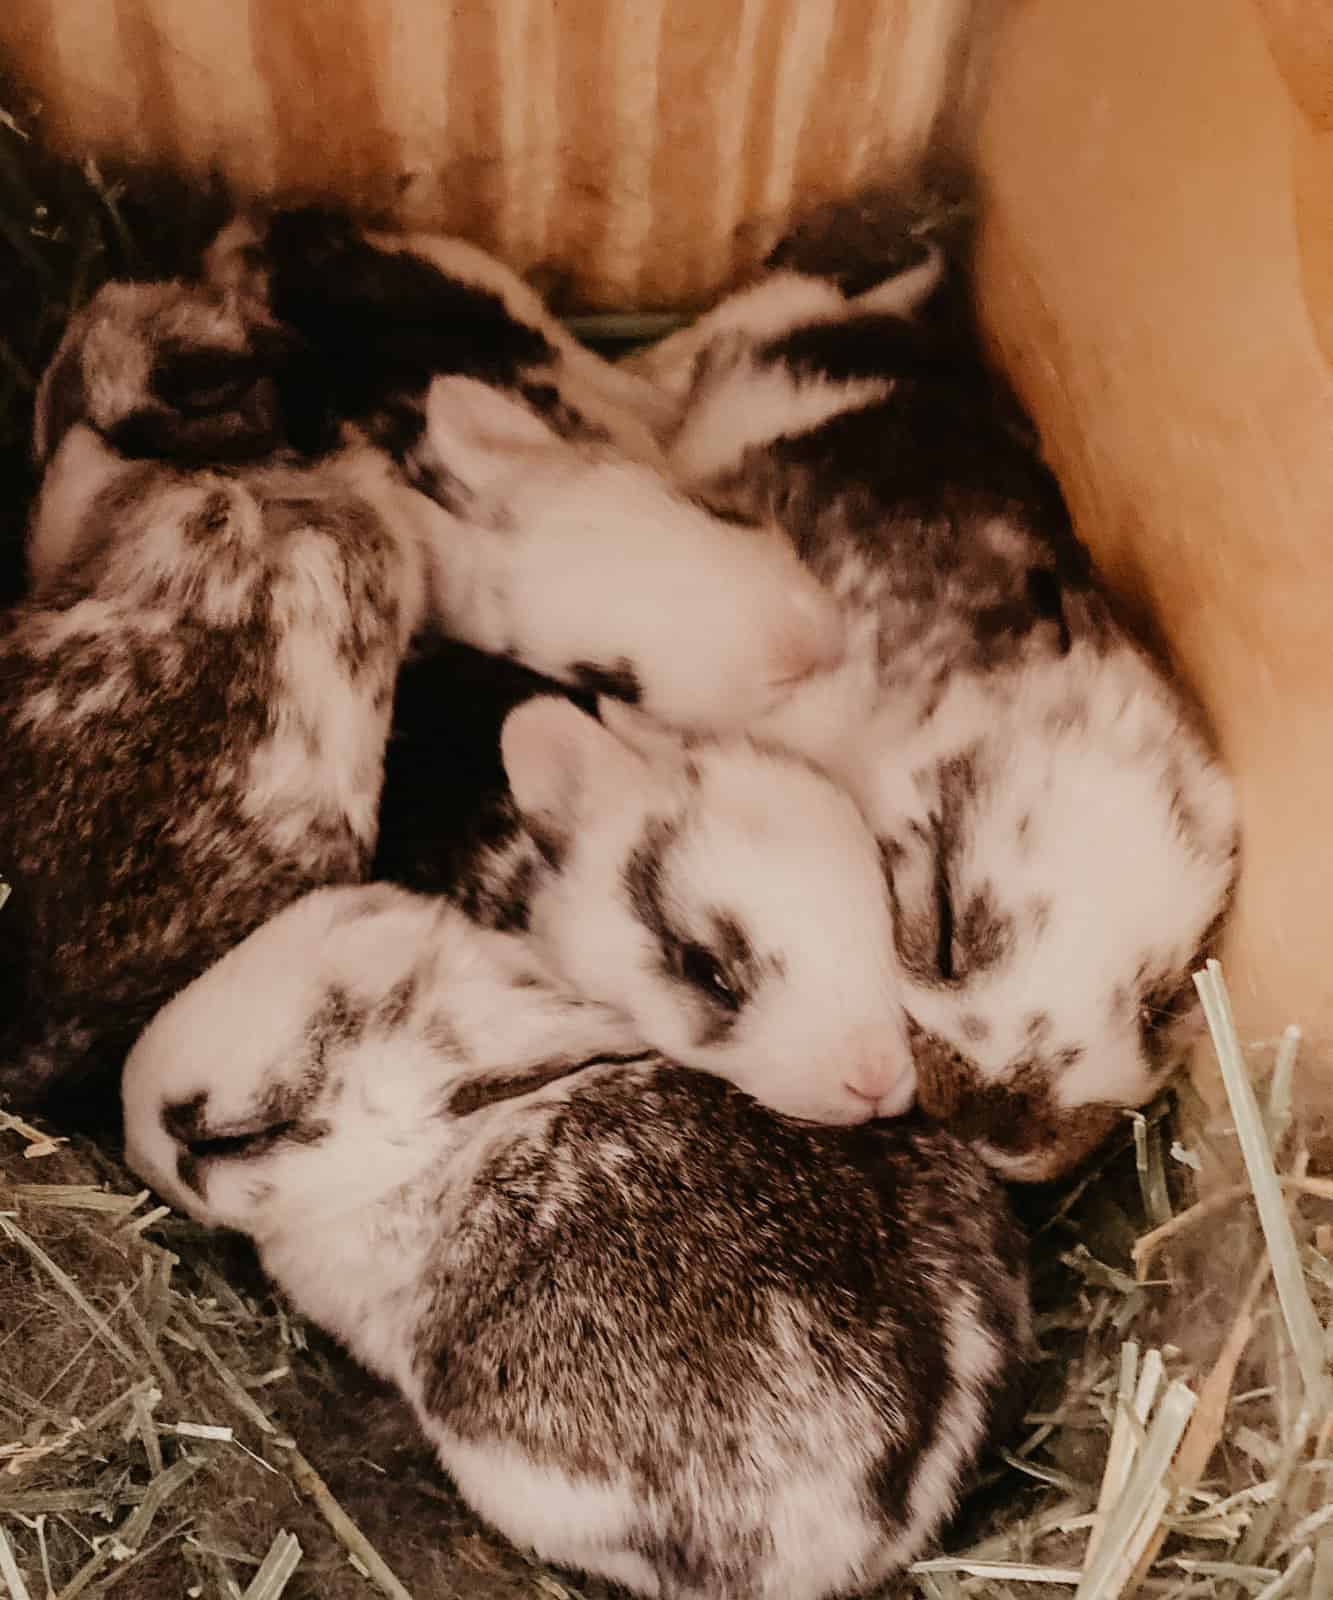 Rabbit kits in a nesting box